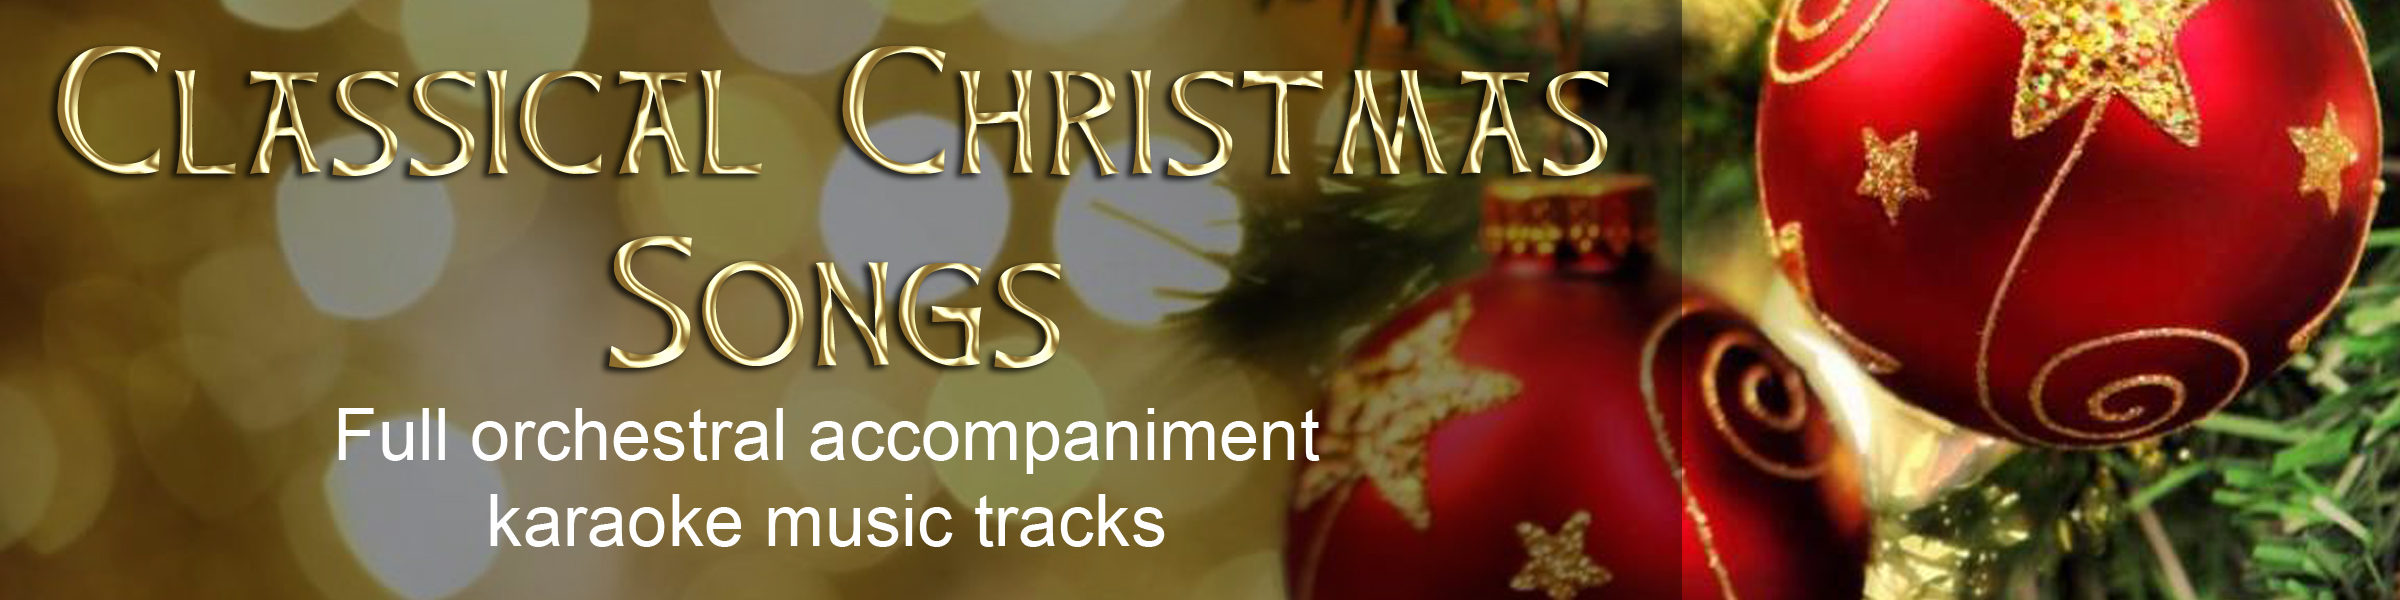 Classical Christmas songs, Full Orchestral Accompaniment (karaoke) tracks